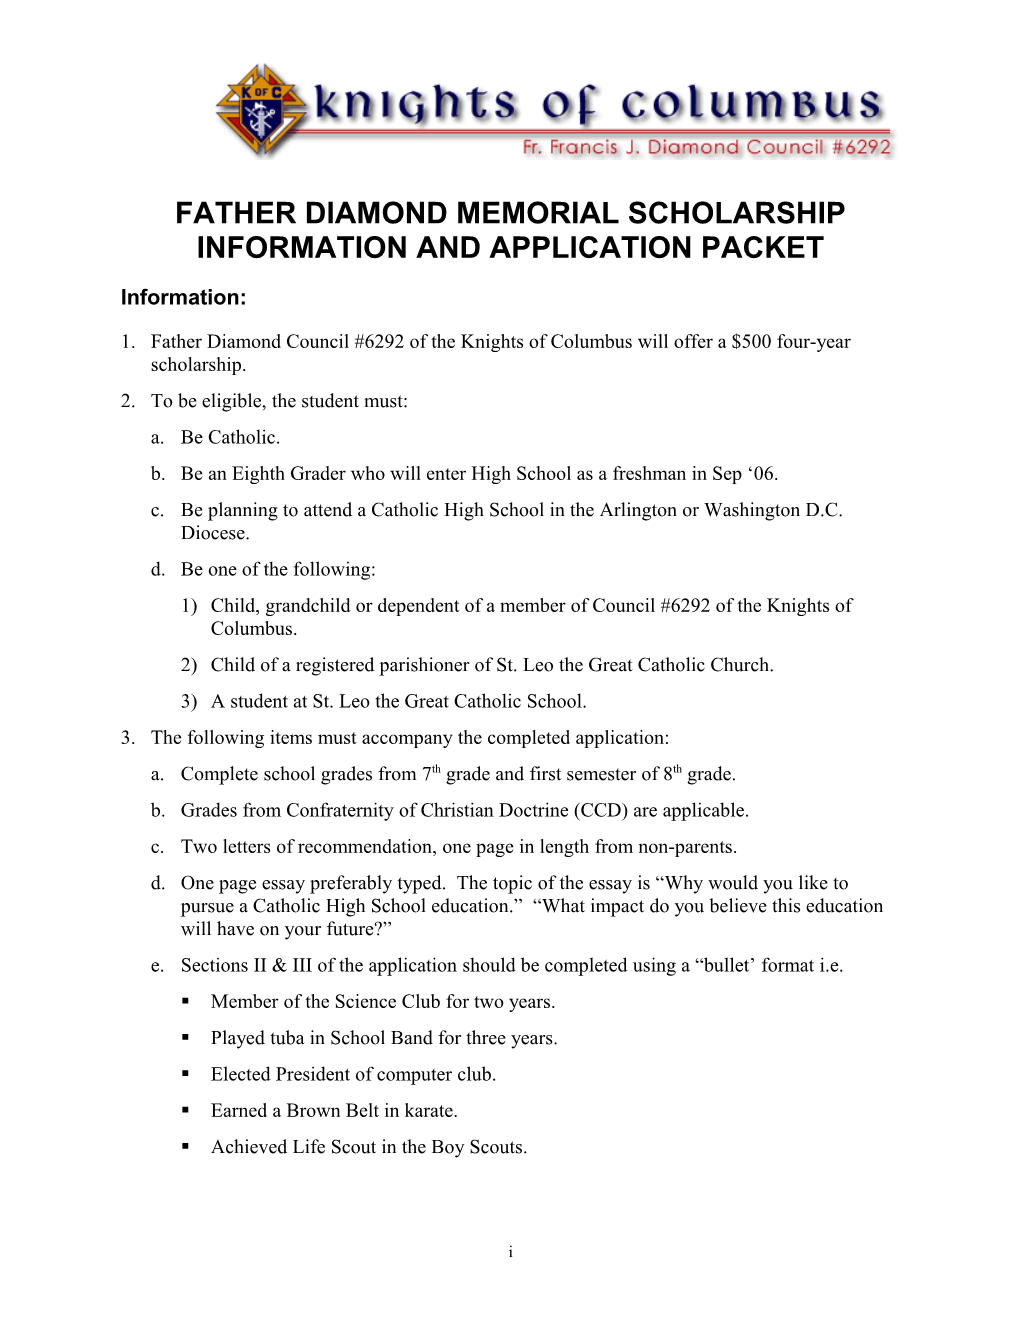 Father Diamond Memeoiral Scholarhsip